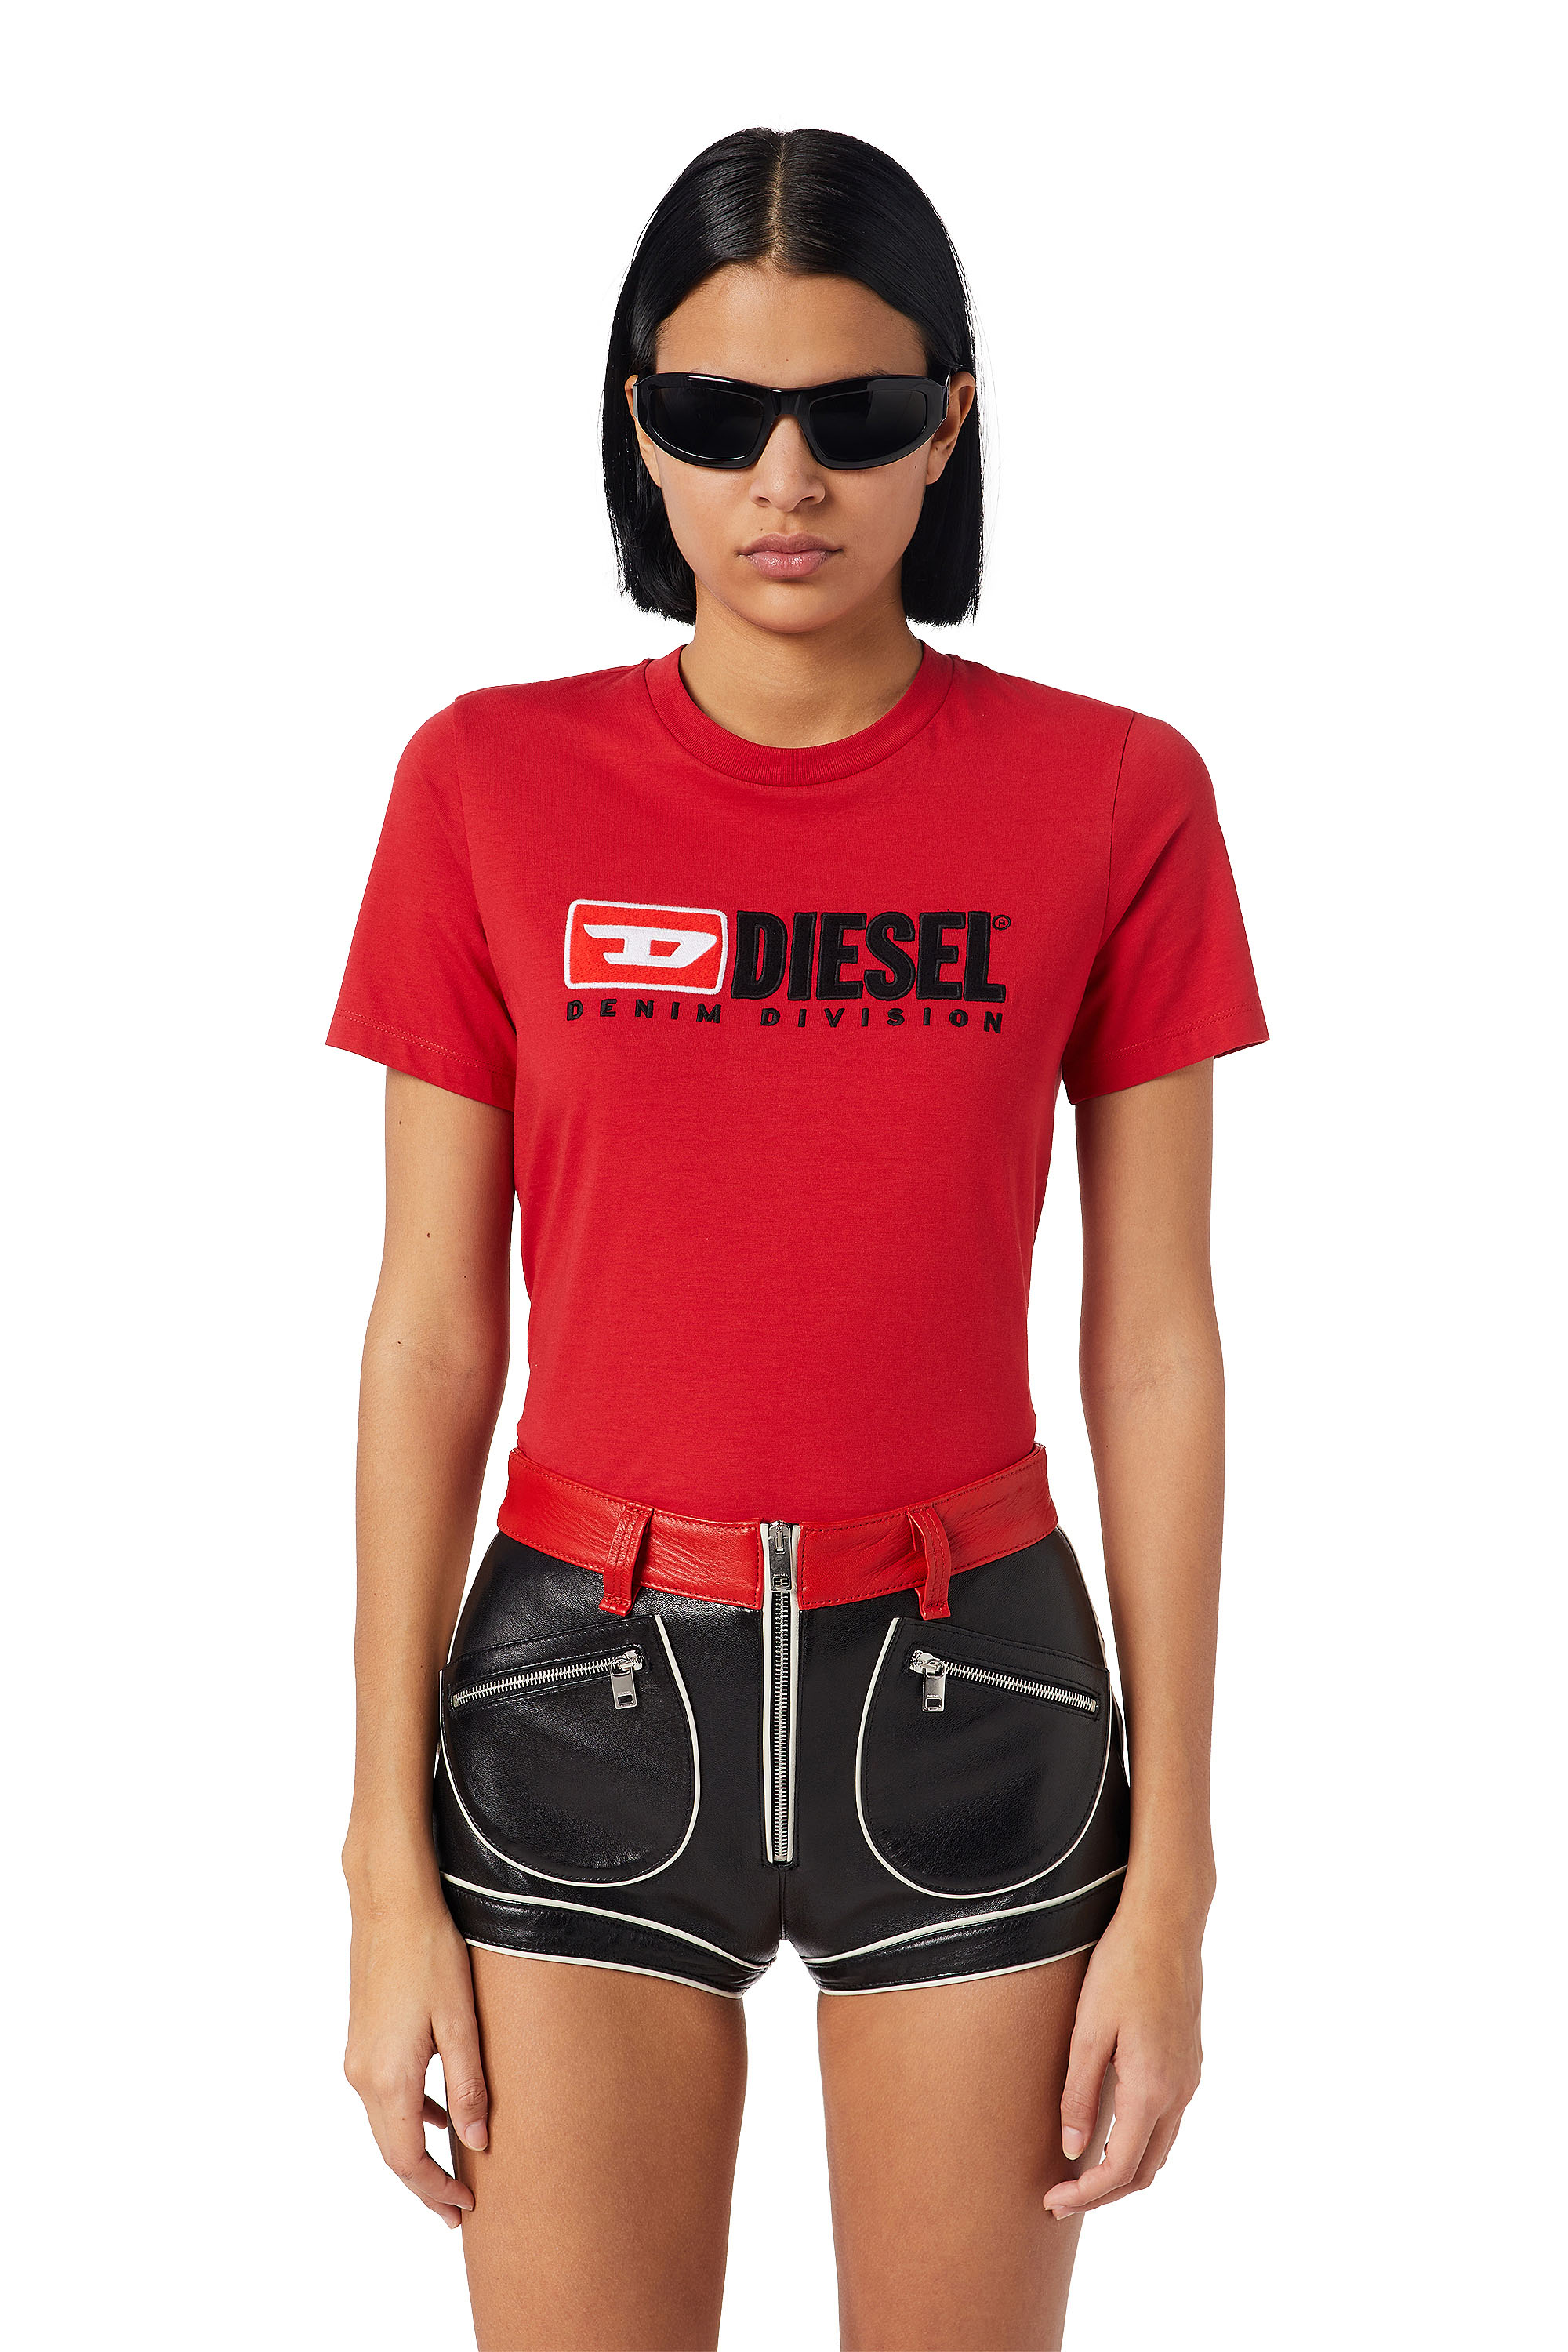 Diesel - T-REG-DIV, Rojo - Image 2